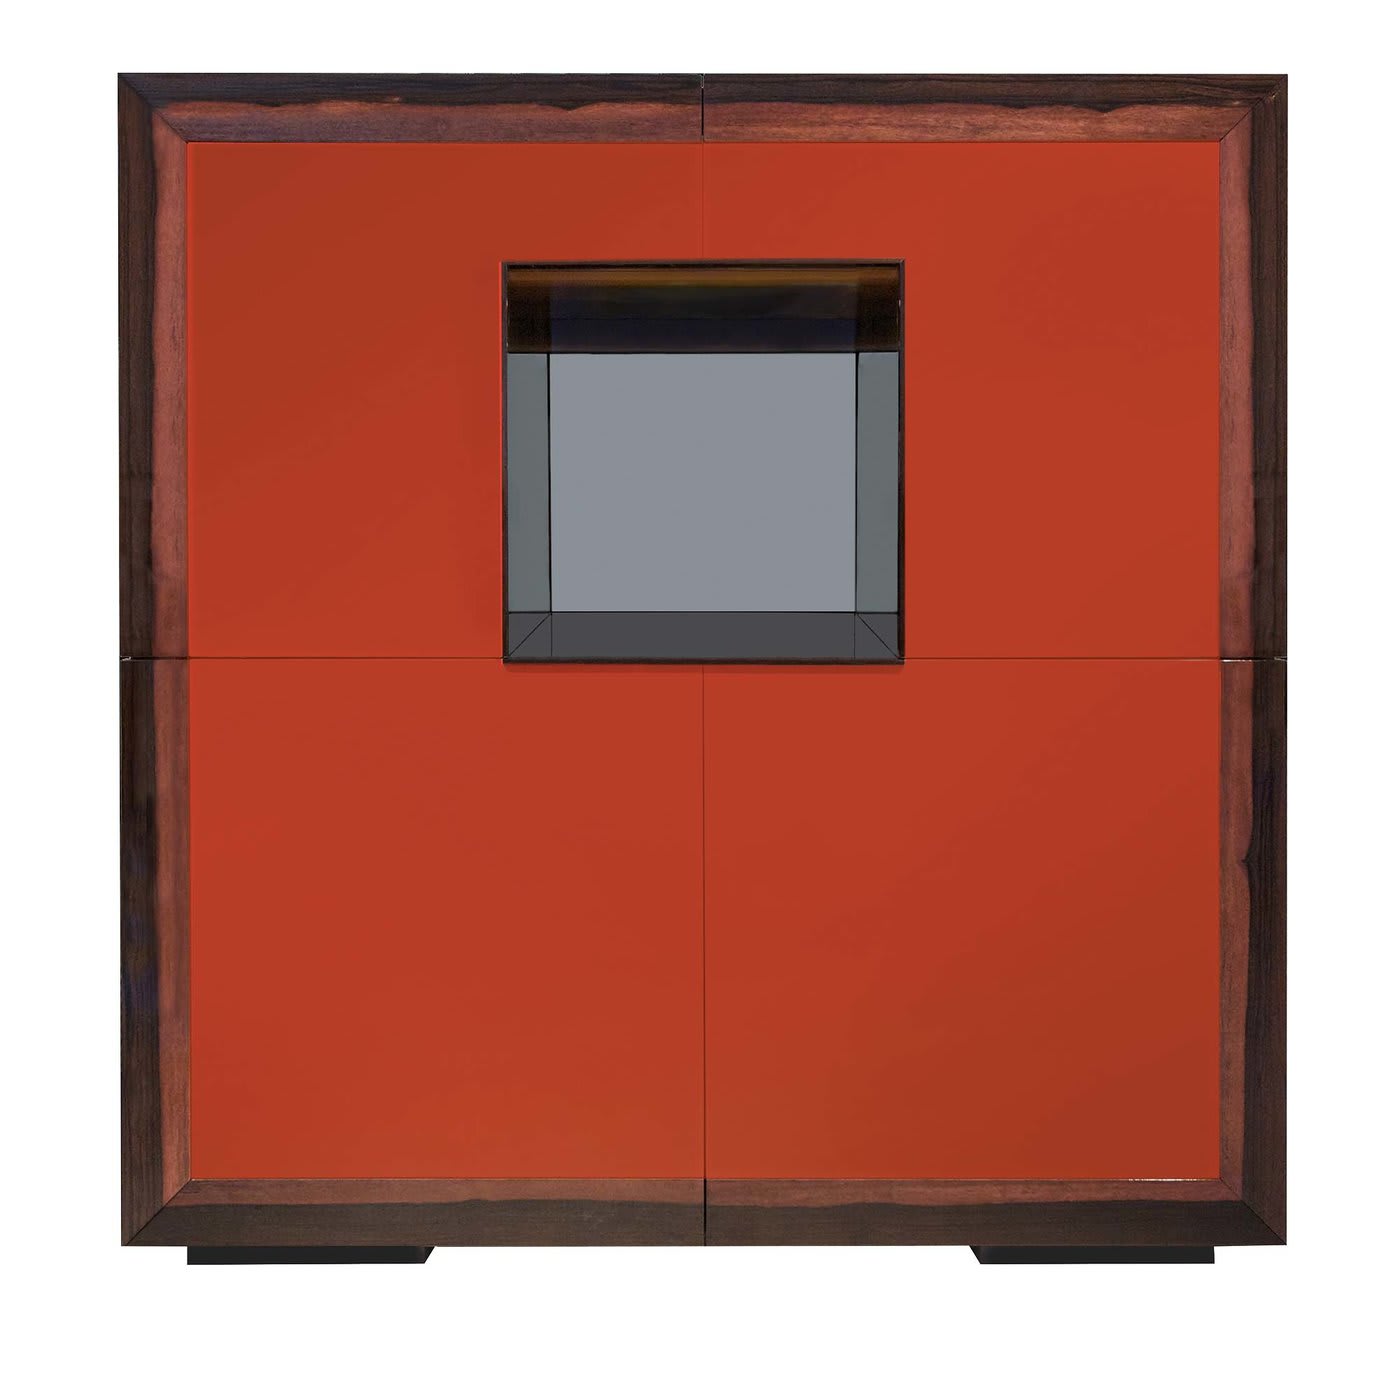 Bob 6 Red Bar Cabinet - Garbarino Collections